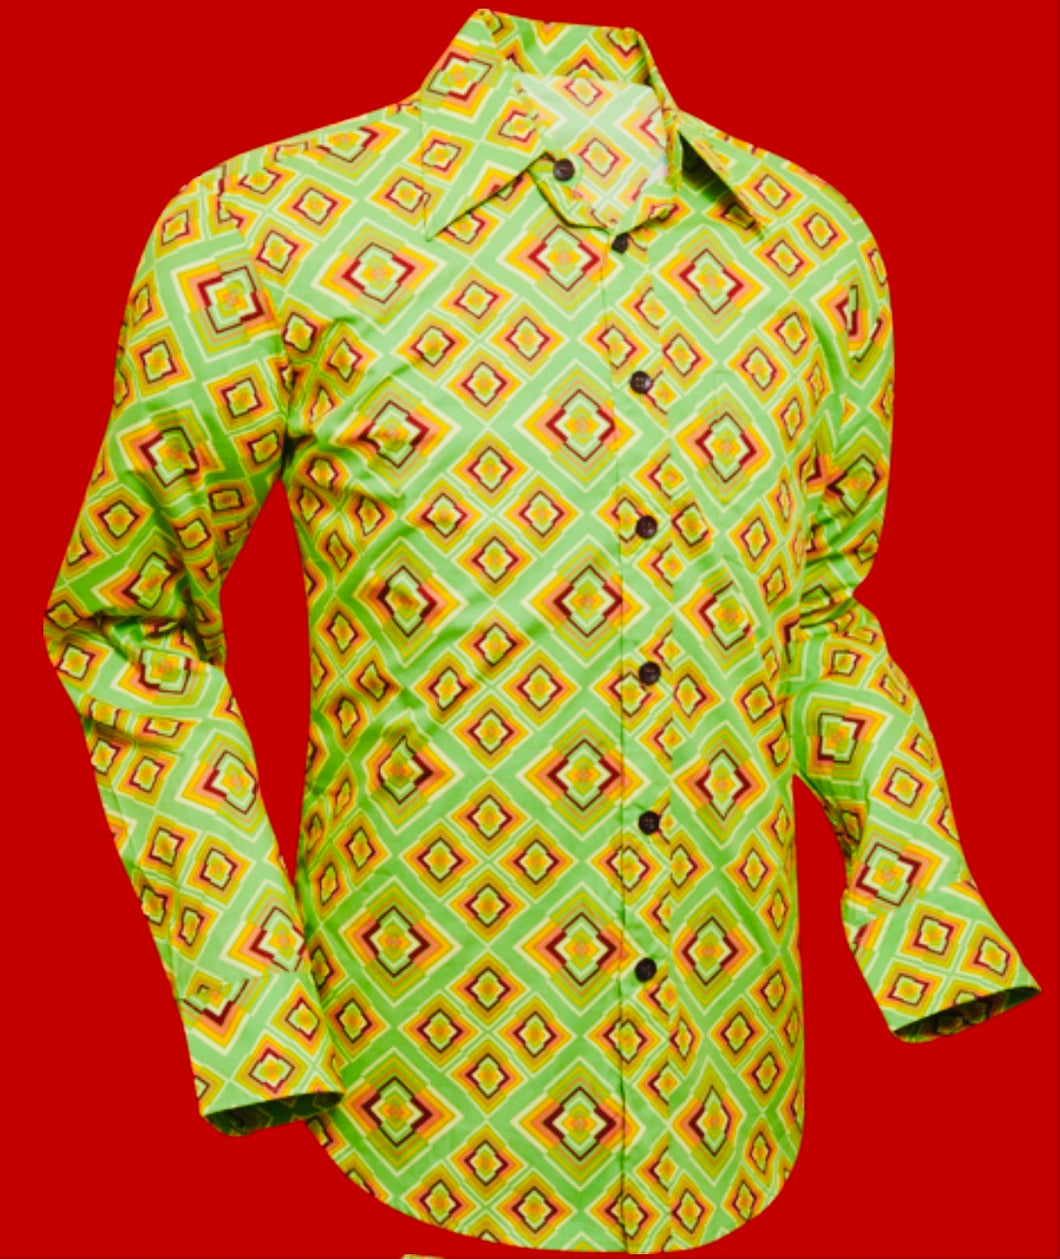 Rhombus design long sleeved Retro 70s style shirt in Light Green